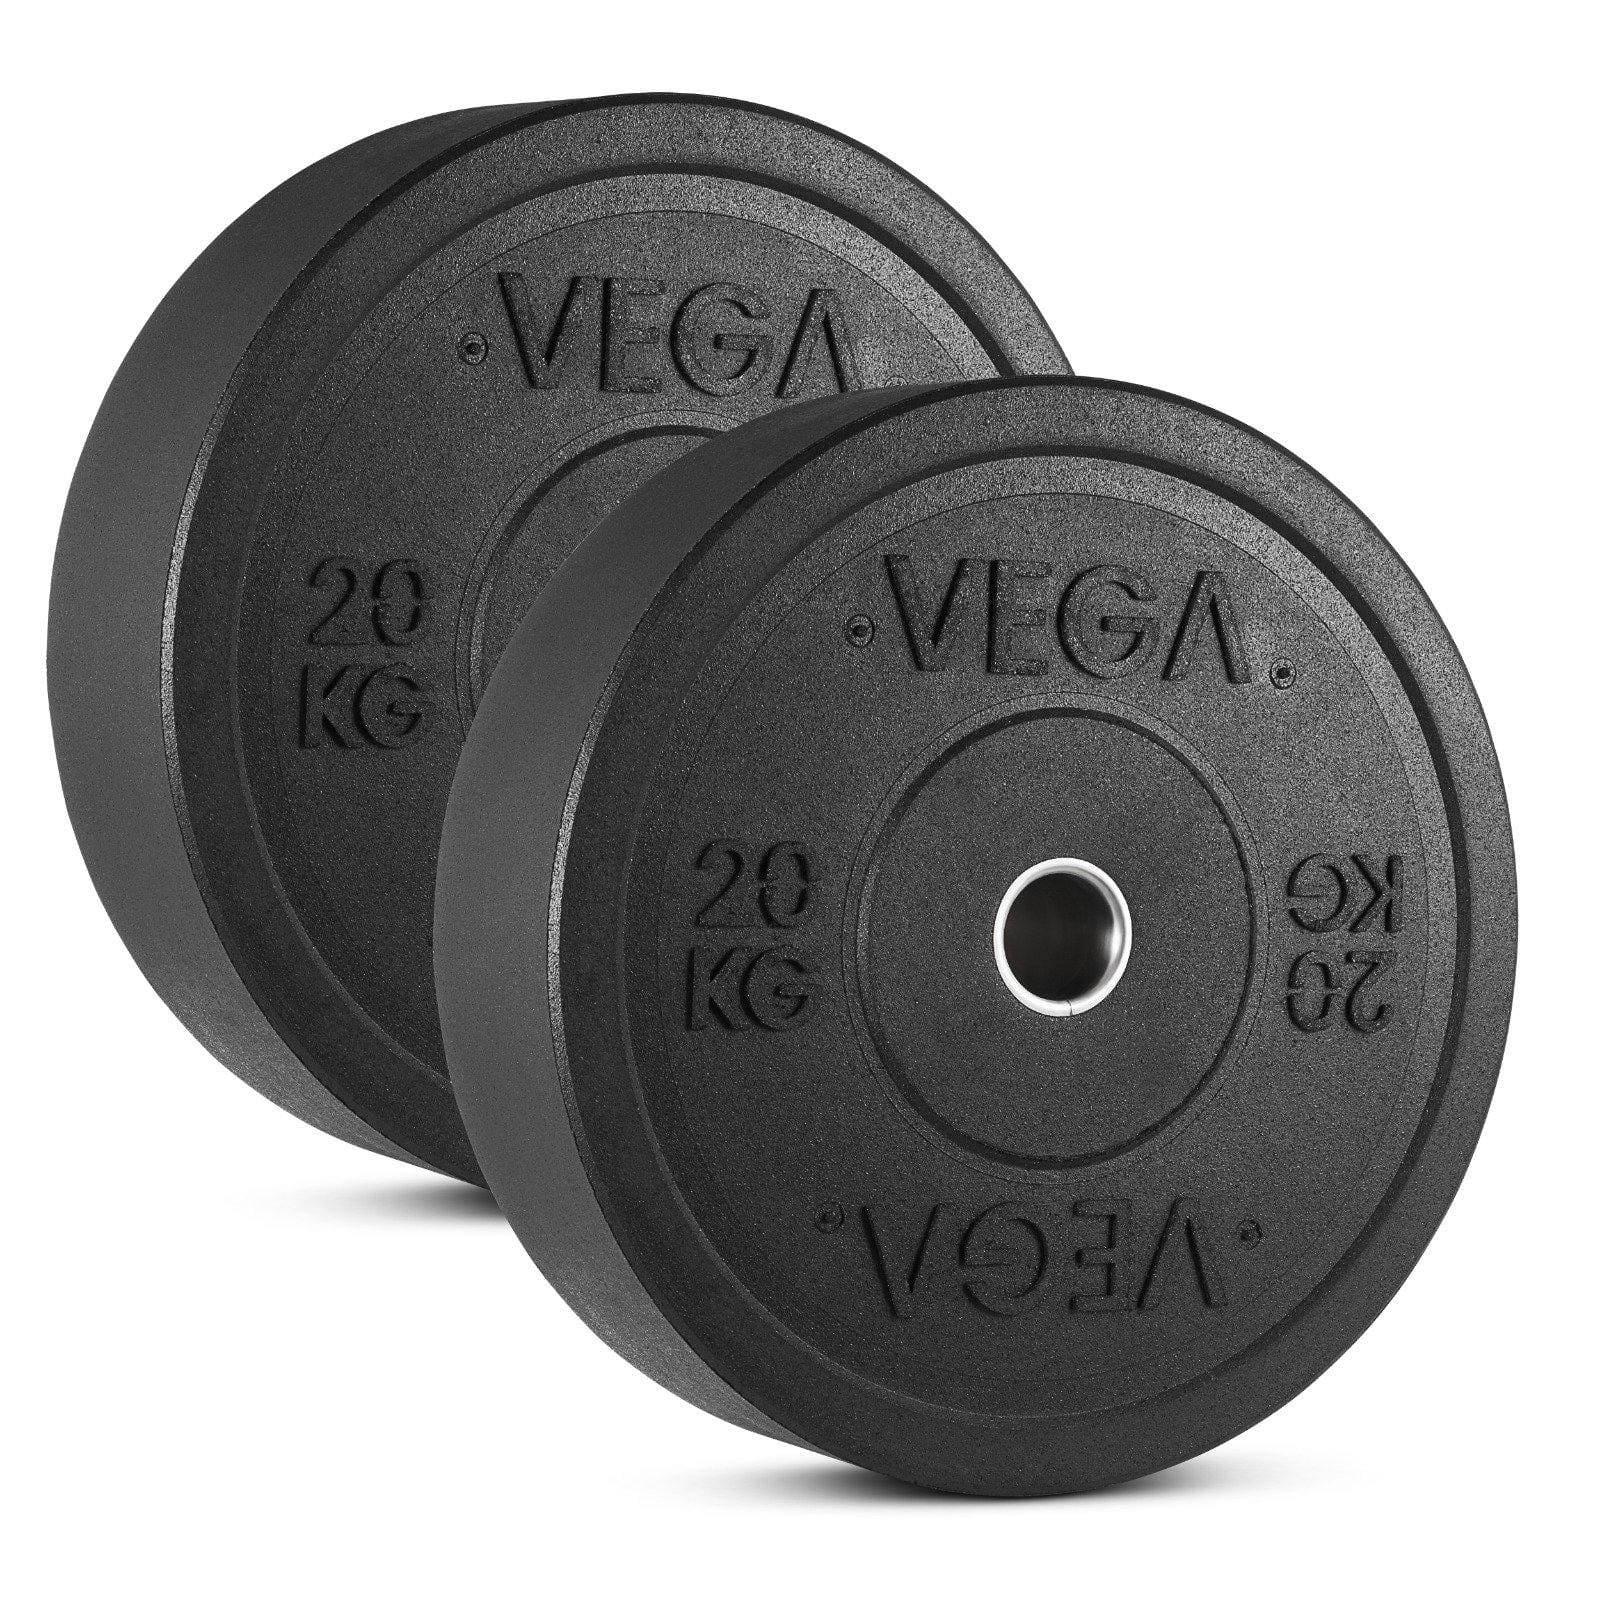 VEGA Fitness 100kg Rubber Bumper Plate Set with 7ft Escape Olympic Power Bar 20kg plates